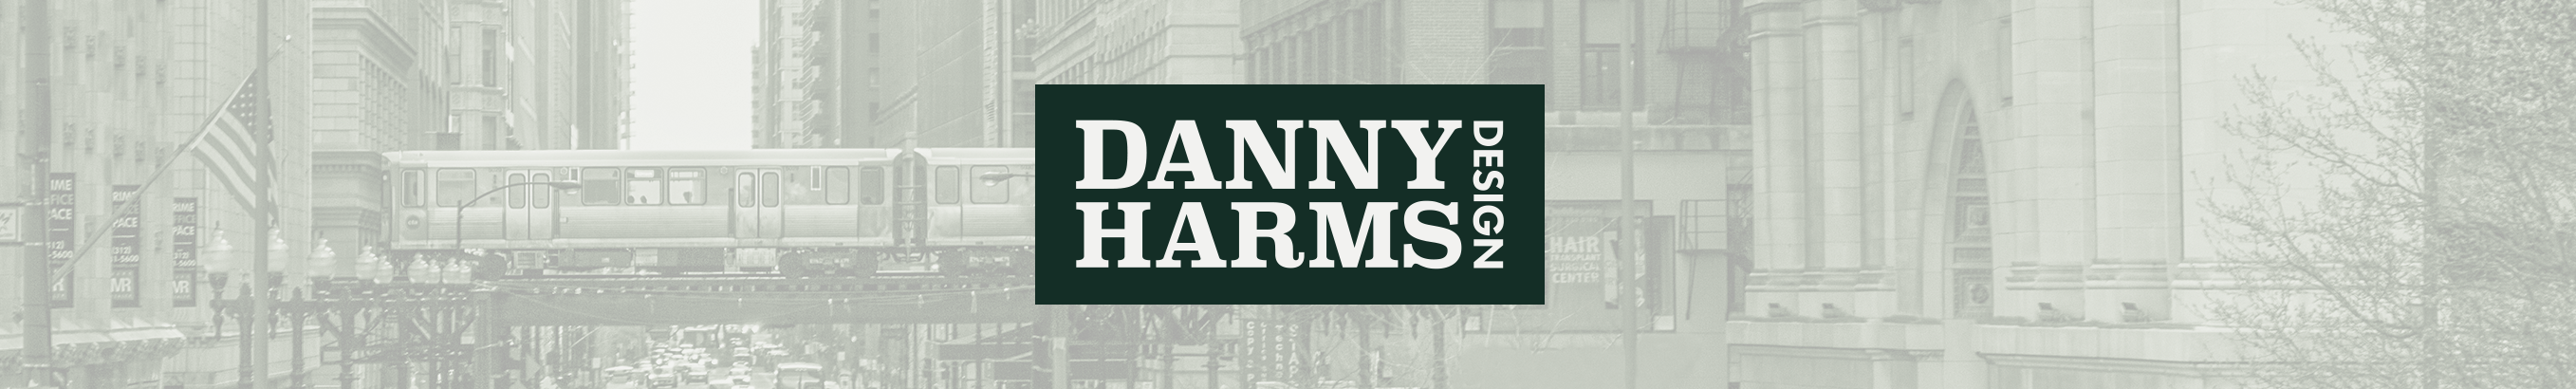 Danny Harms profil başlığı